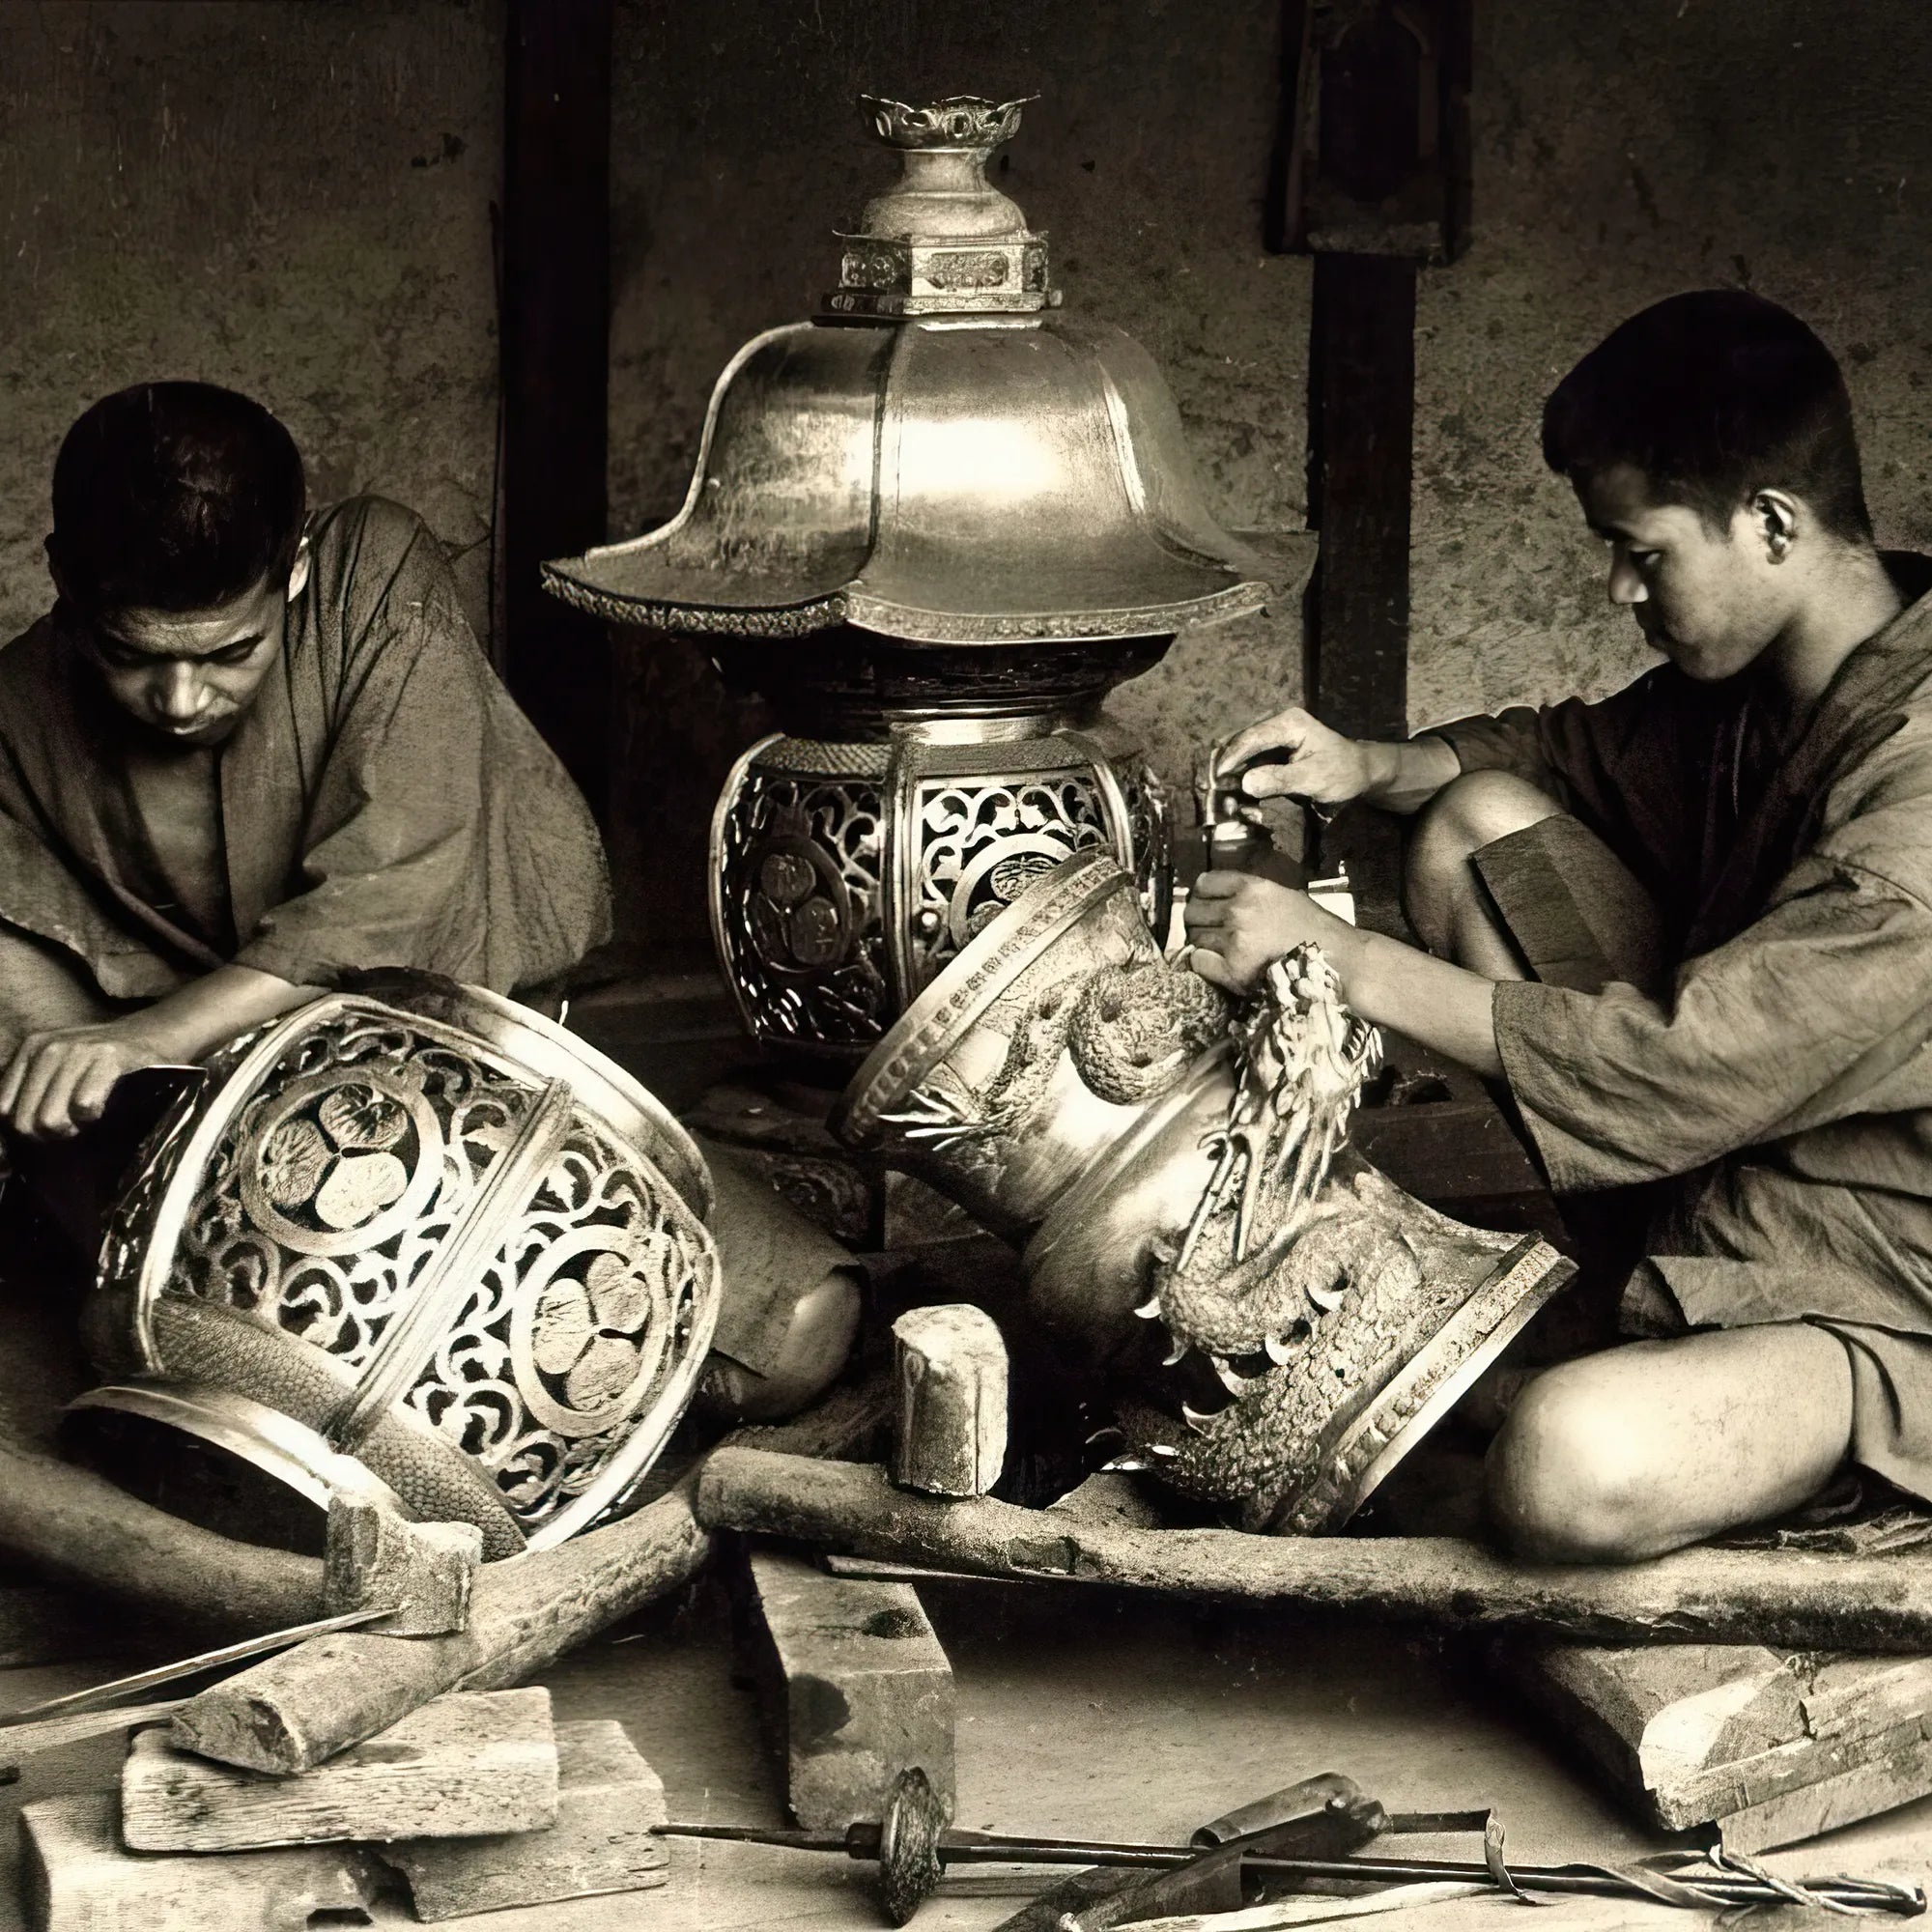 Explore the Art of Shokunin: Master Craftsmanship in Japan